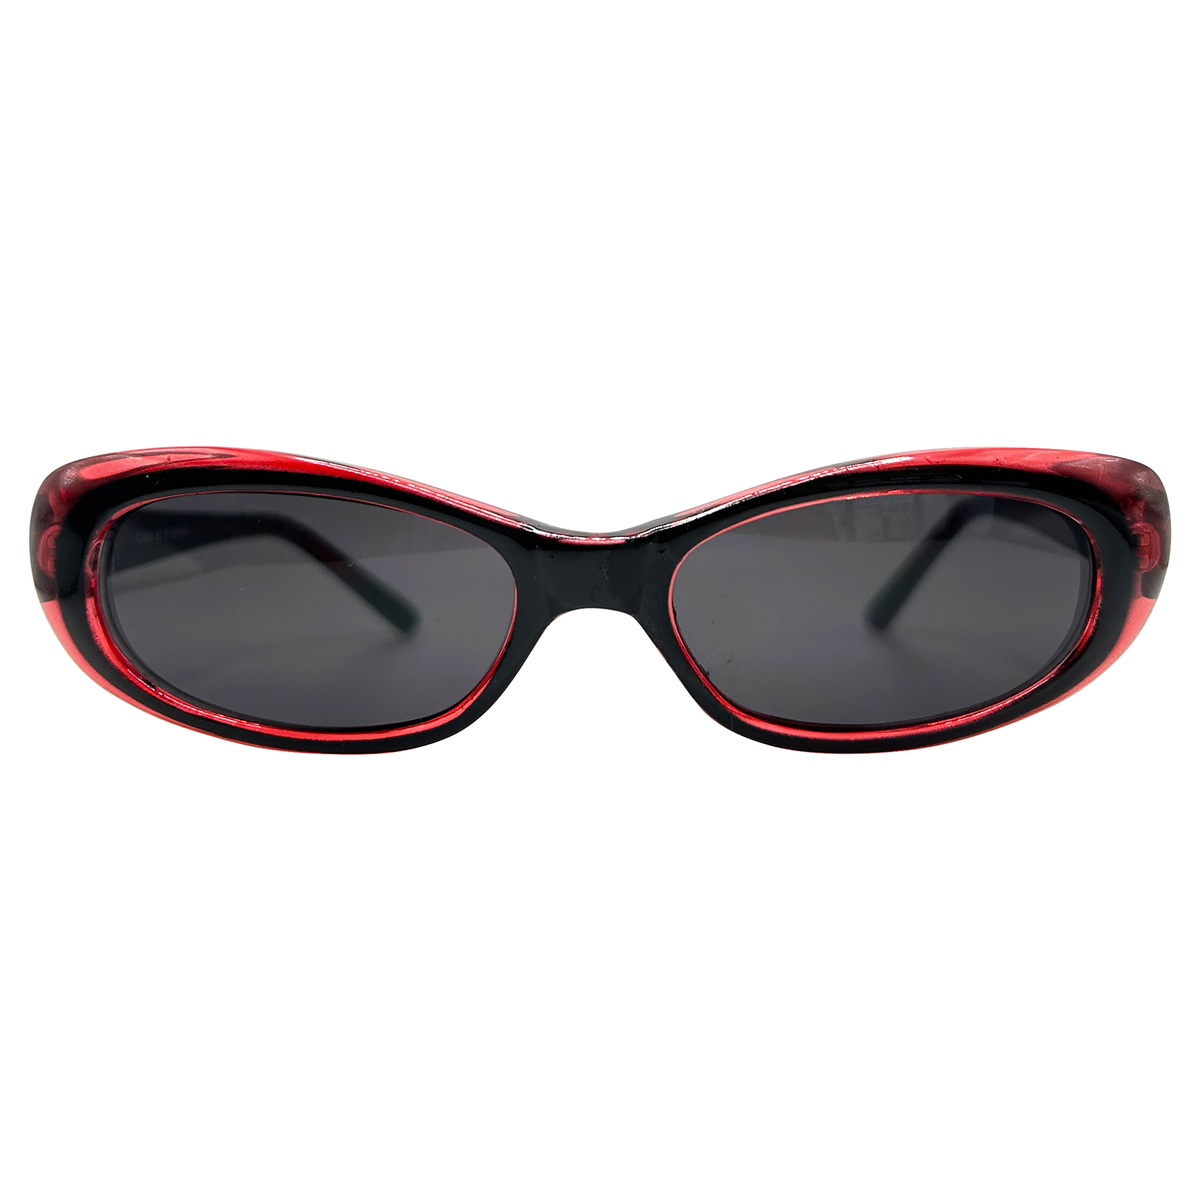 BUJU Cat-Eye 90s Sunglasses